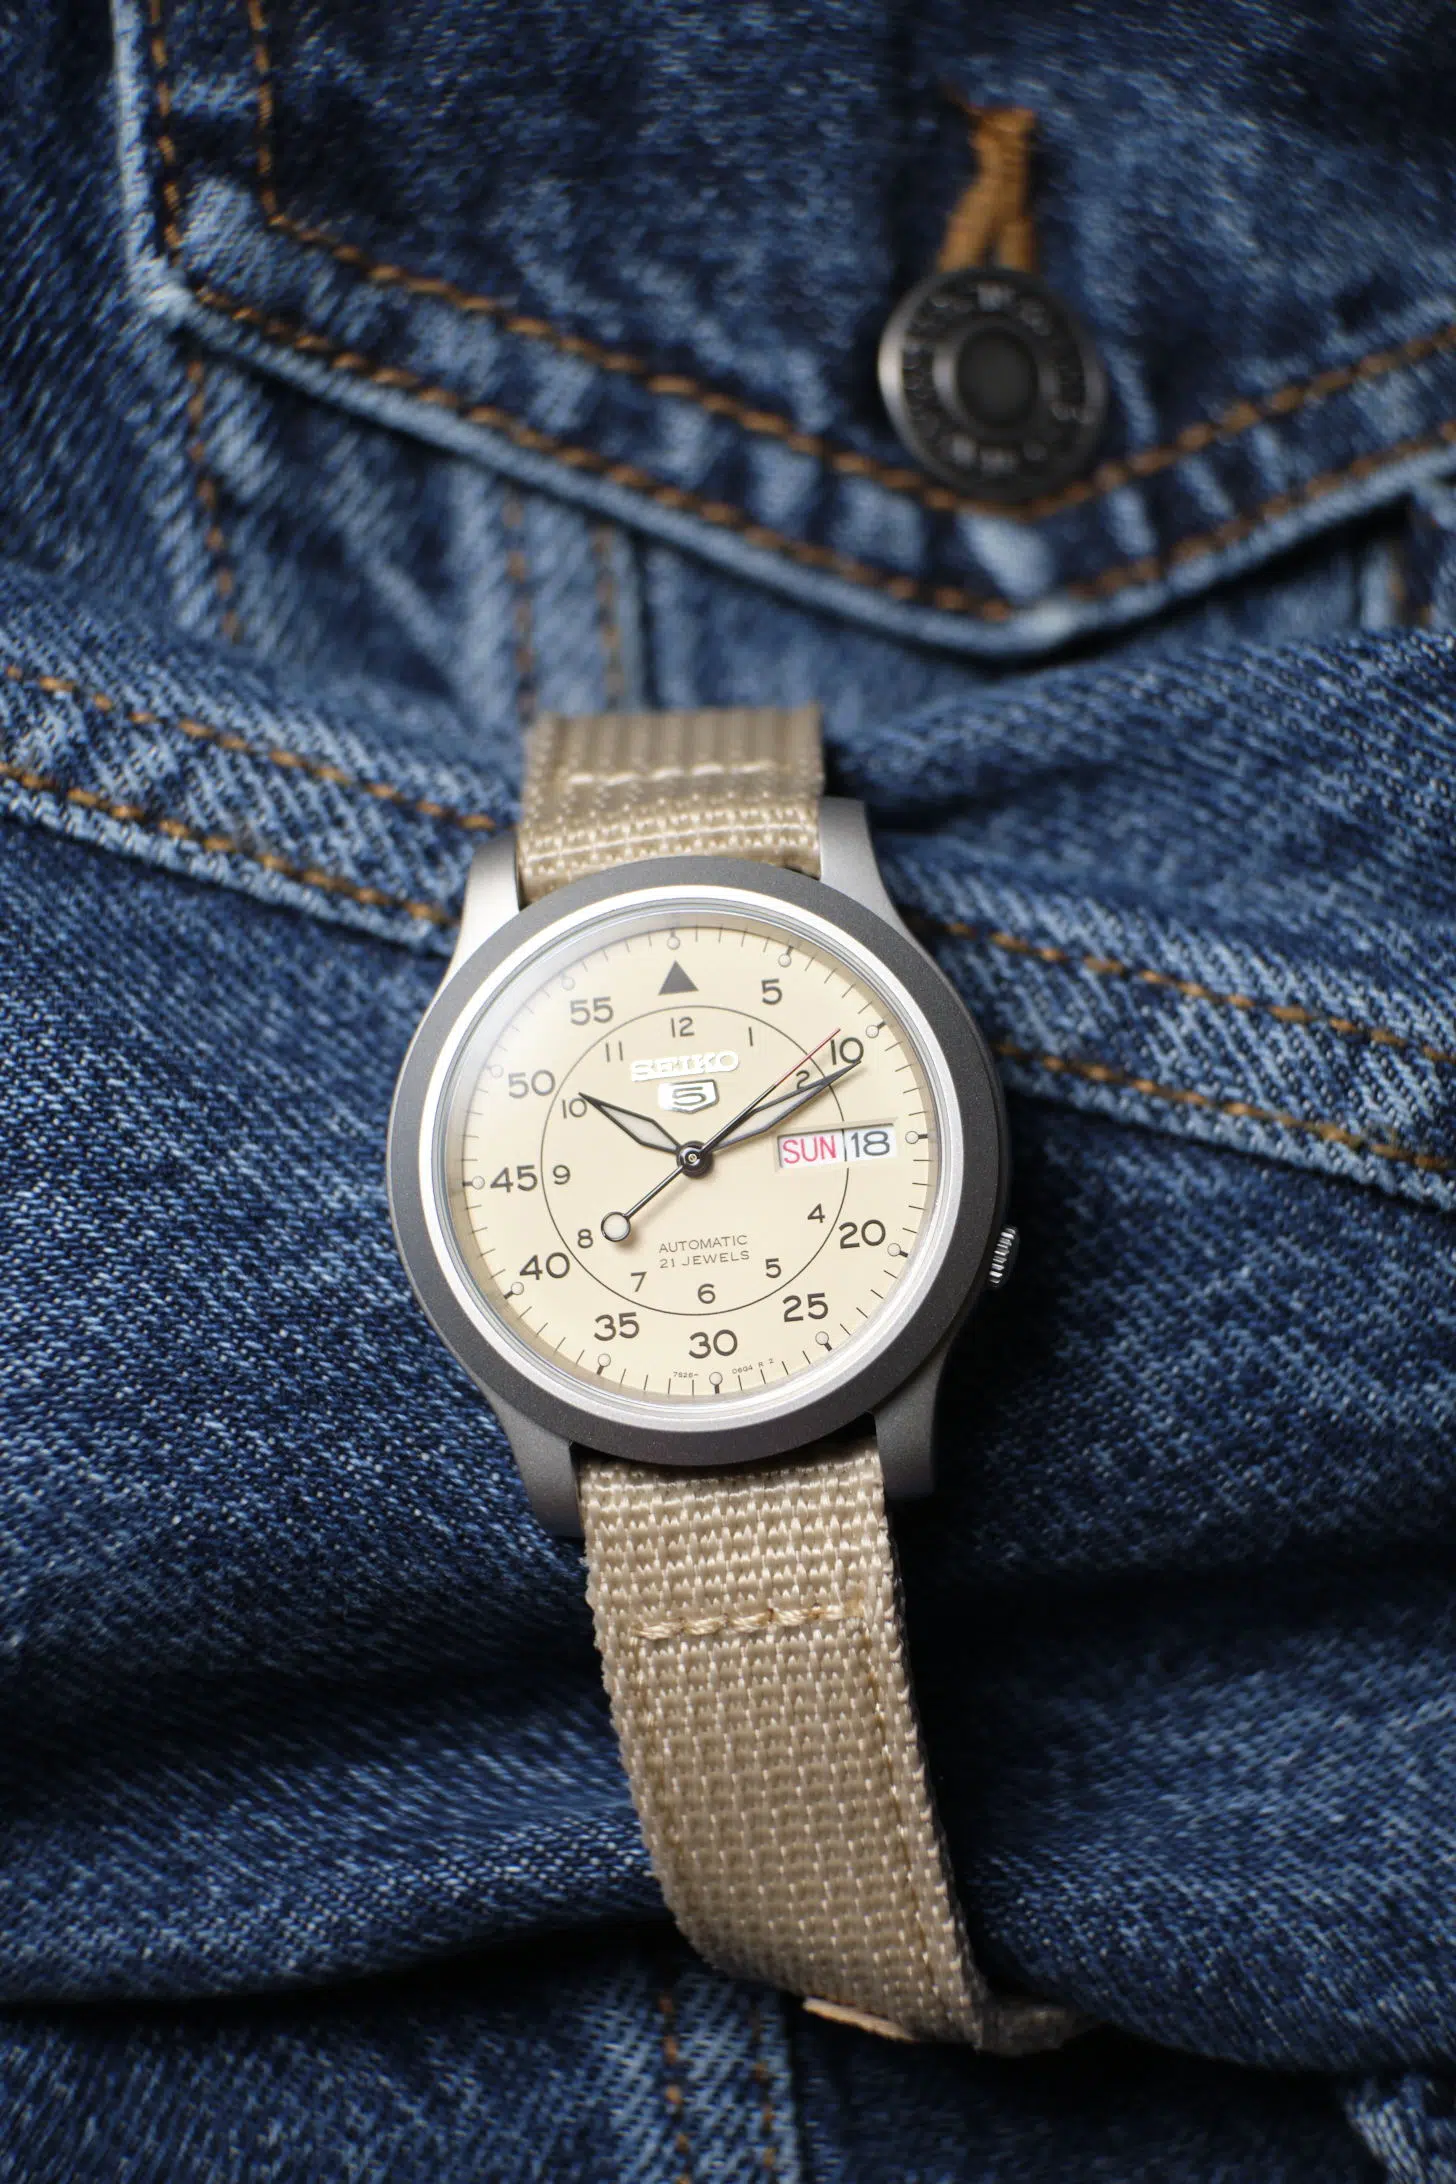 Seiko SNK803 automatic watch